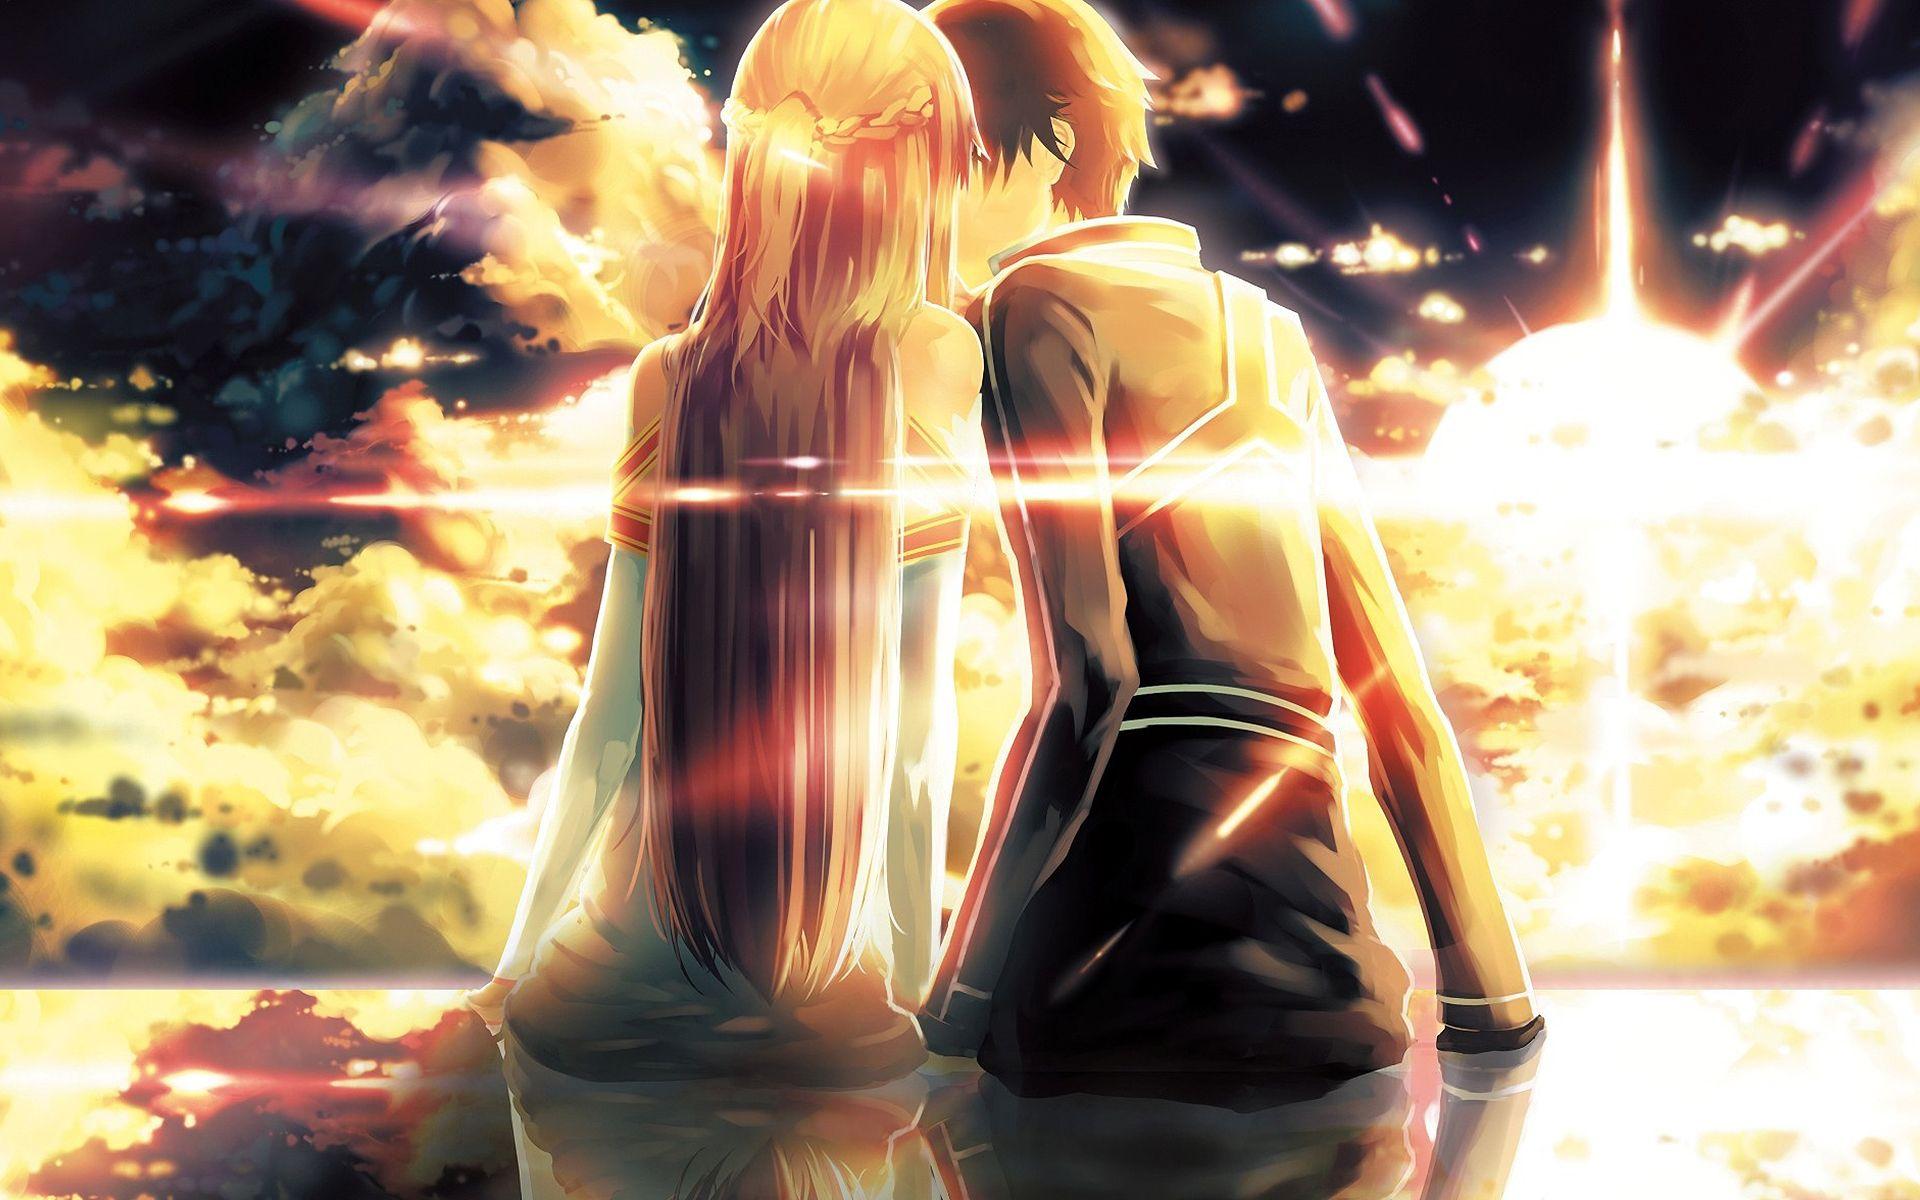 Romantic Anime Wallpaper Free Romantic Anime